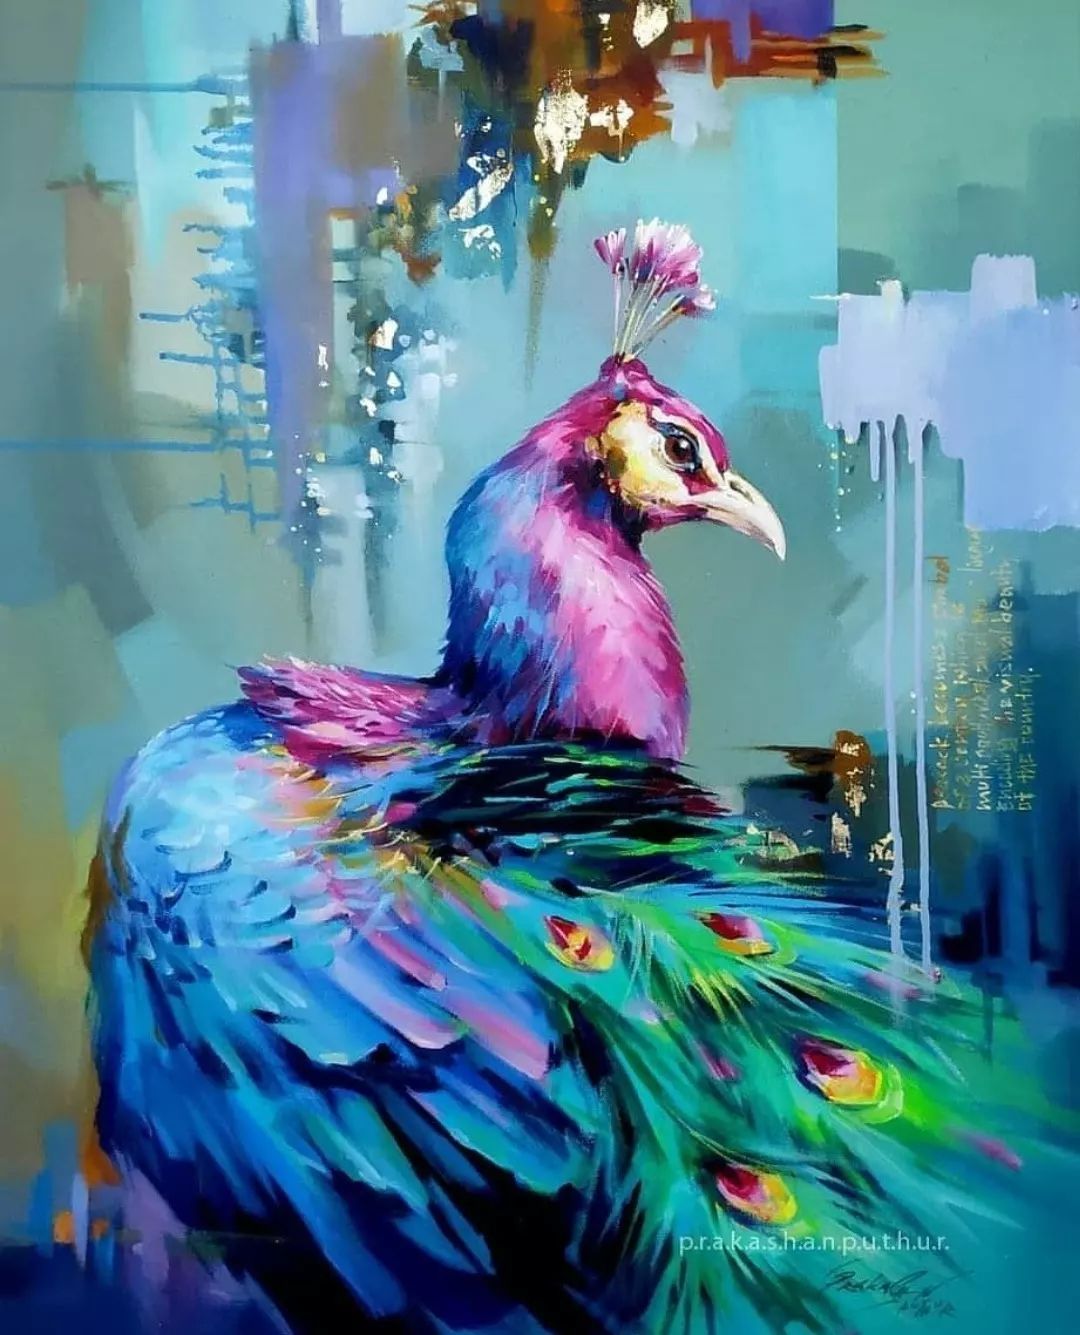 acrylic painting peacock by prakashan puthur